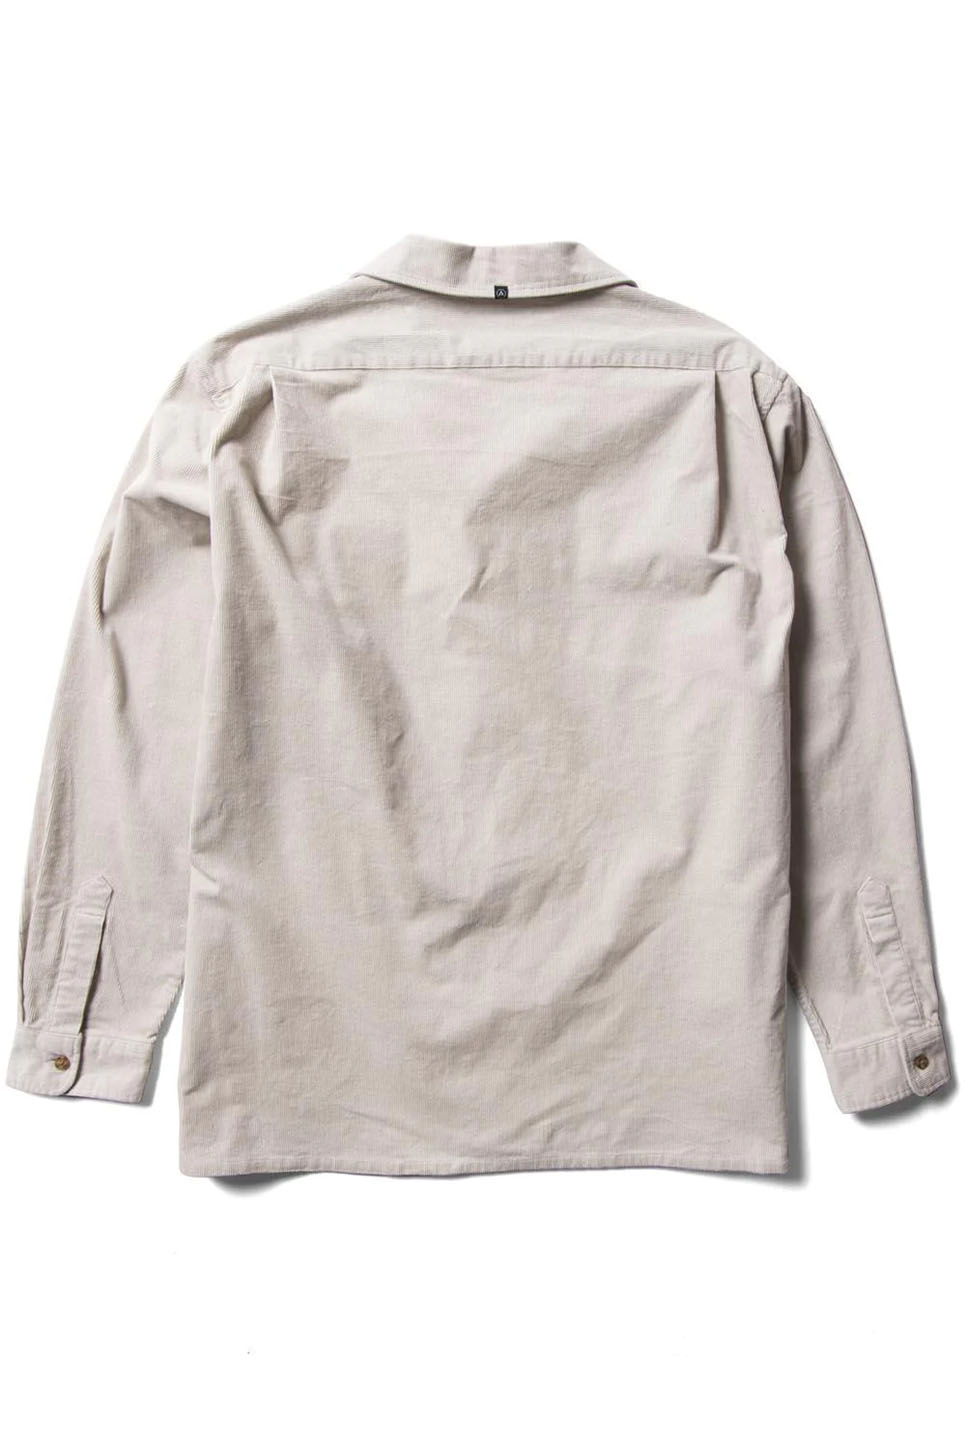 Vissla - Good Times Cord Eco LS Shirt - Dune - Back